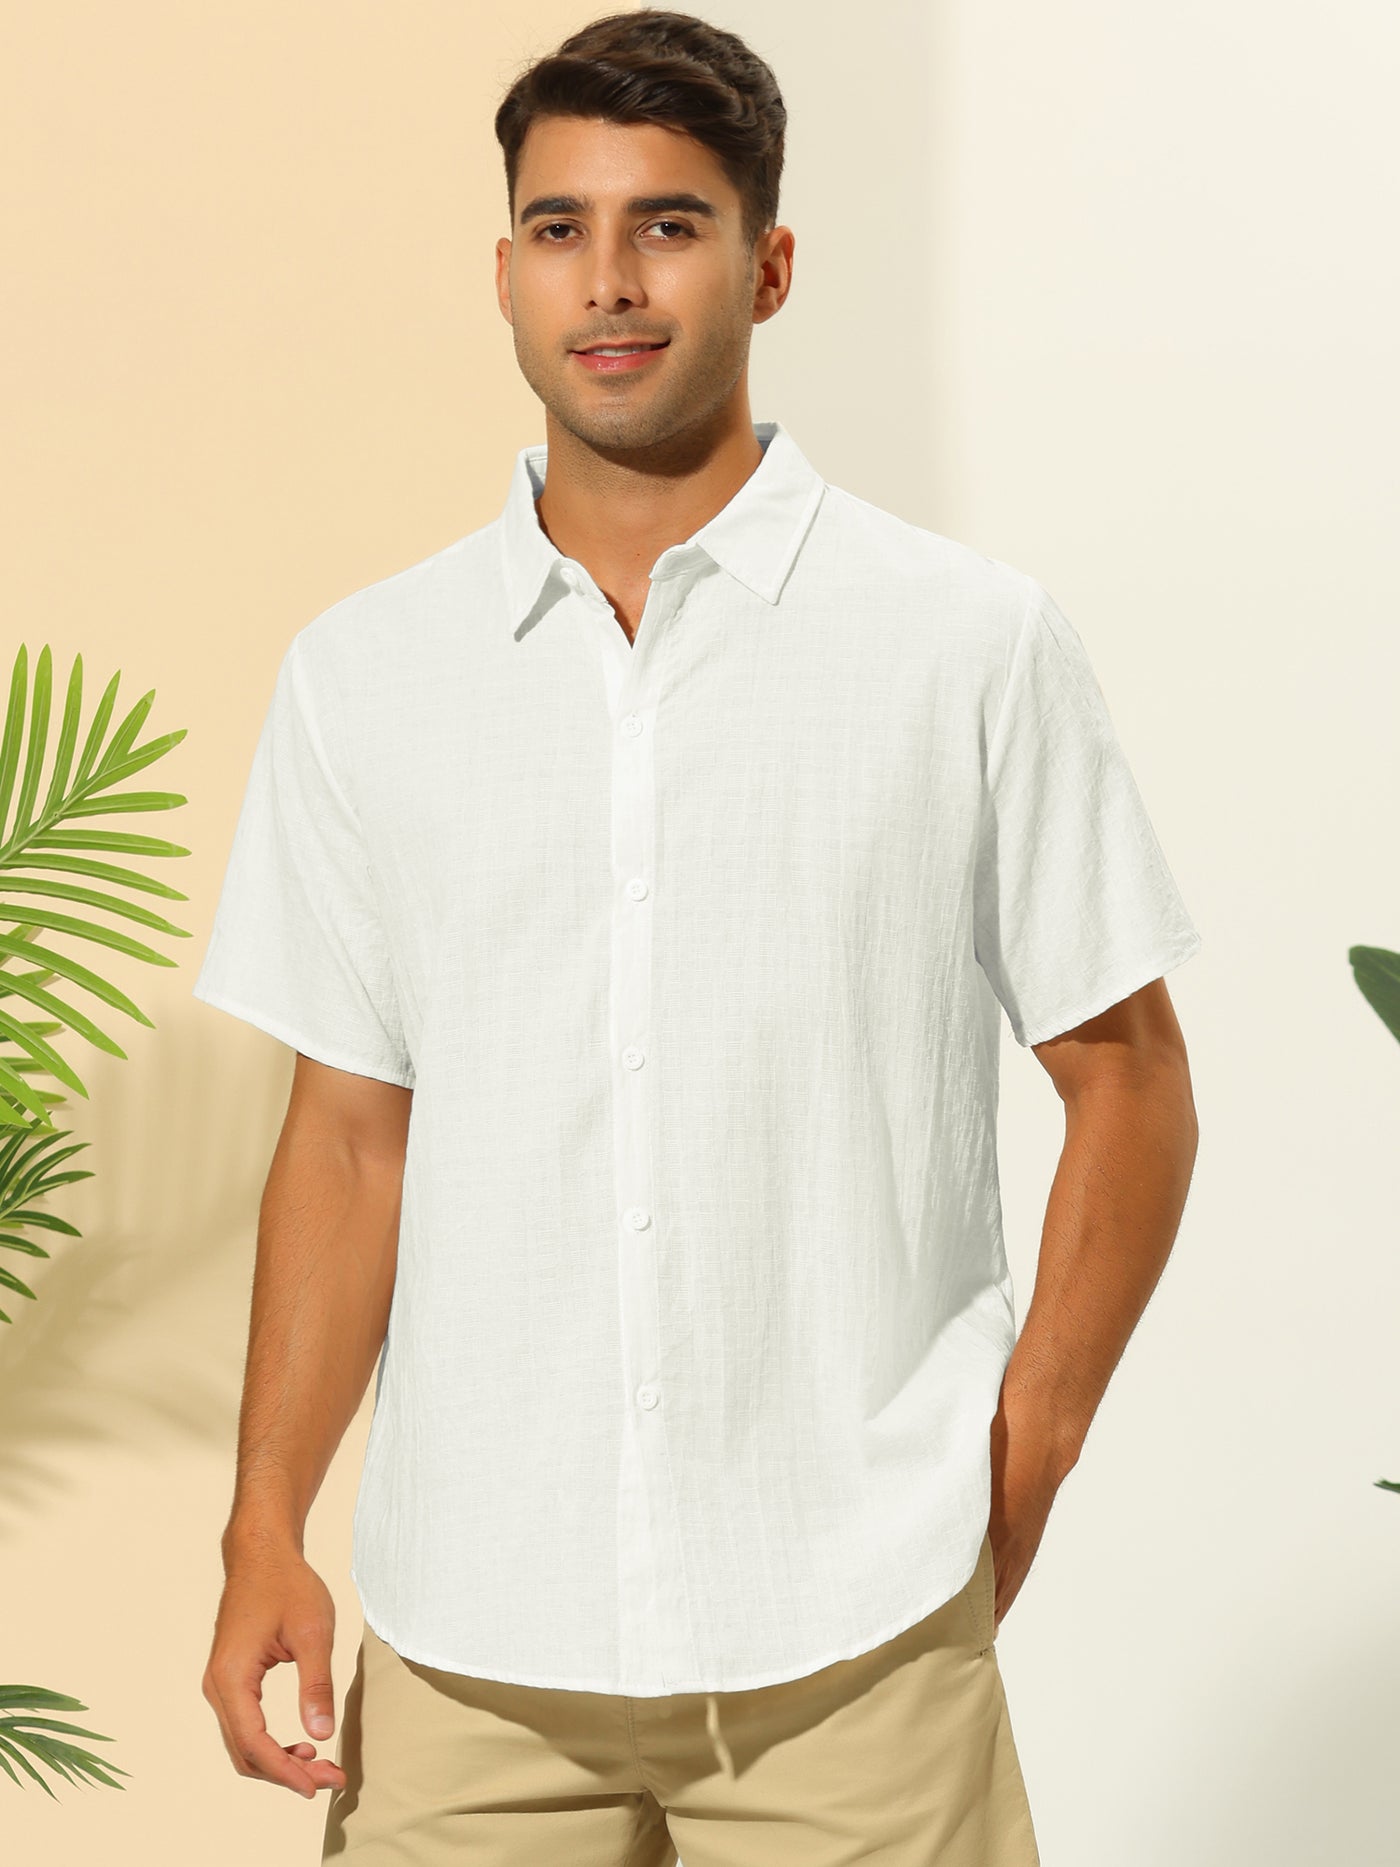 Bublédon Summer Shirts for Men's Solid Color Short Sleeve Point Collar Beach Hawaiian Shirt